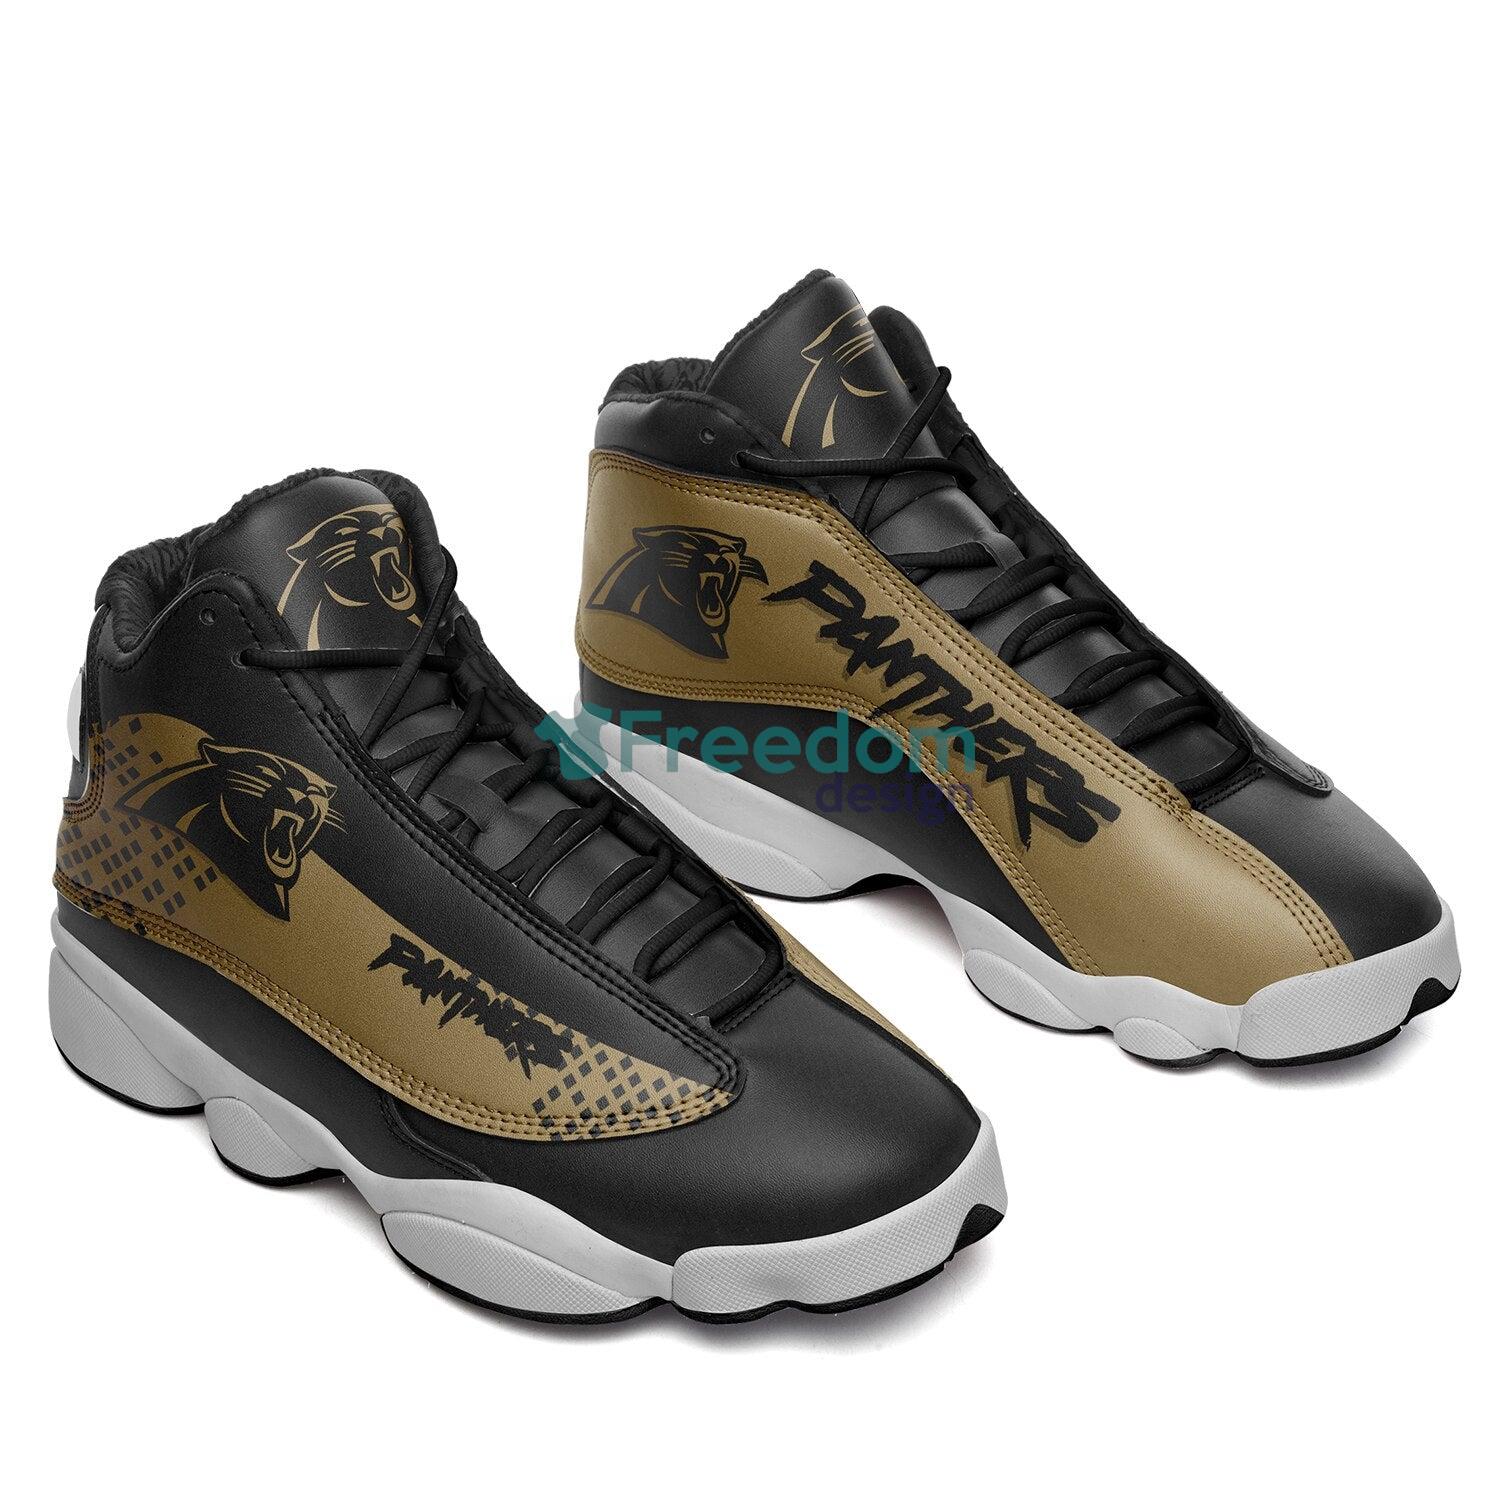 Carolina Panthers Fans Air Jordan 13 Sneaker Shoes For Fans